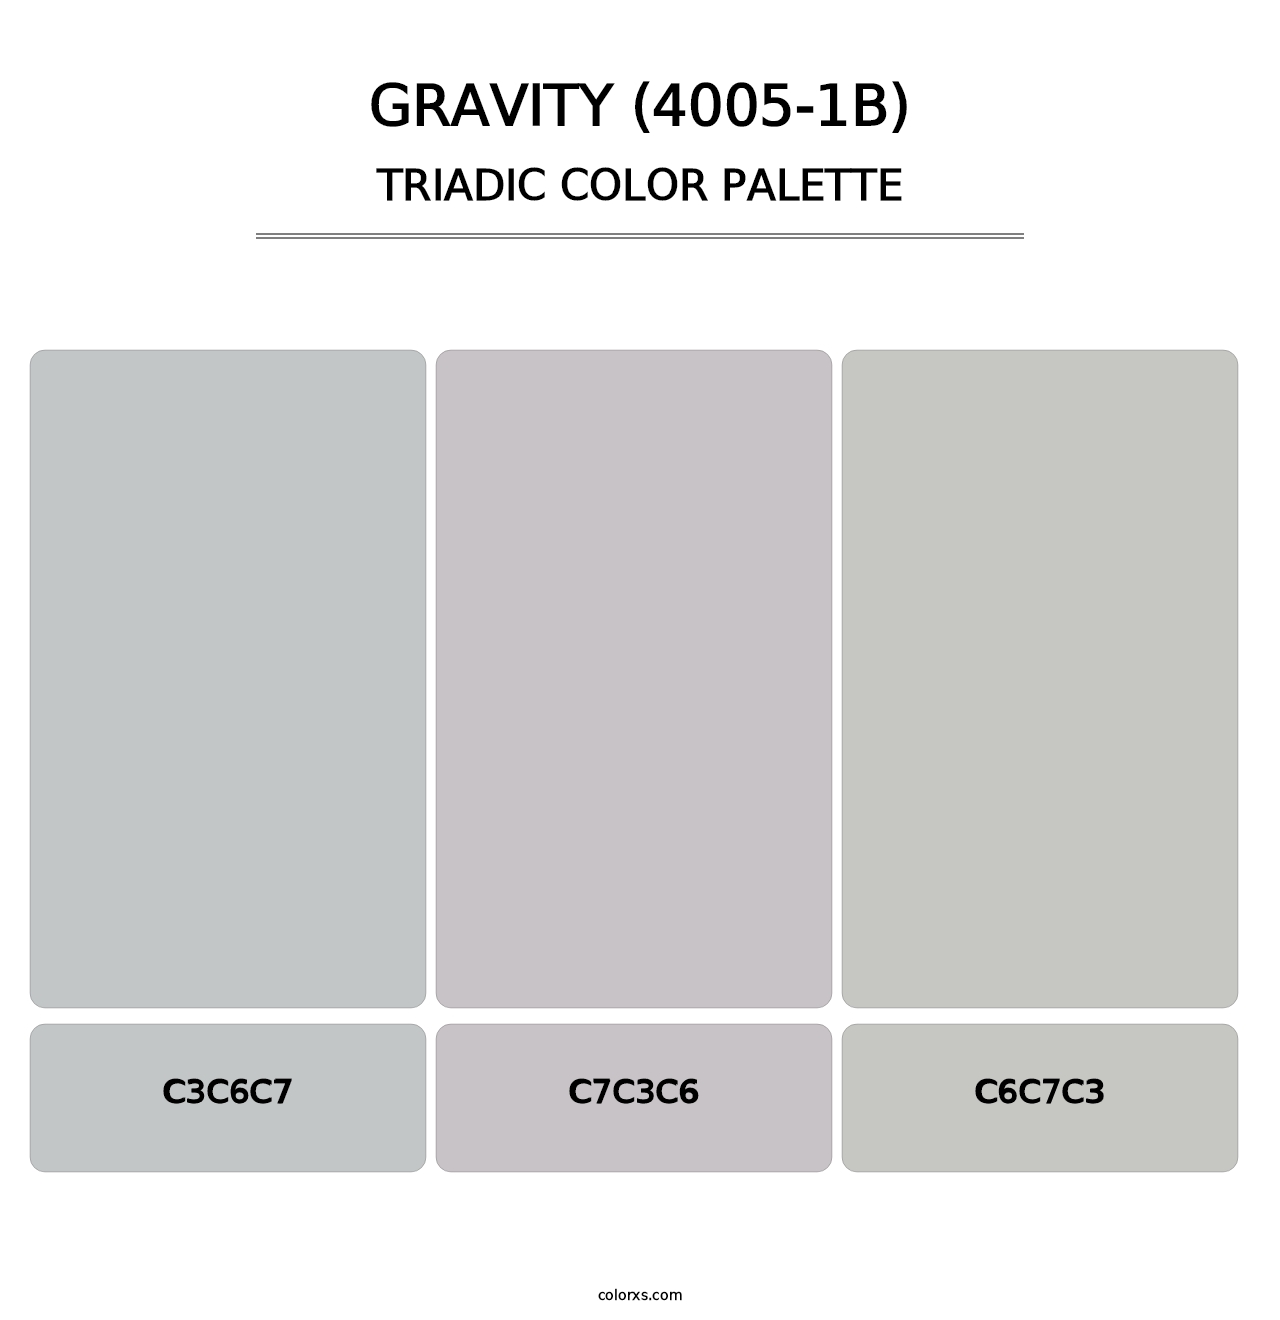 Gravity (4005-1B) - Triadic Color Palette